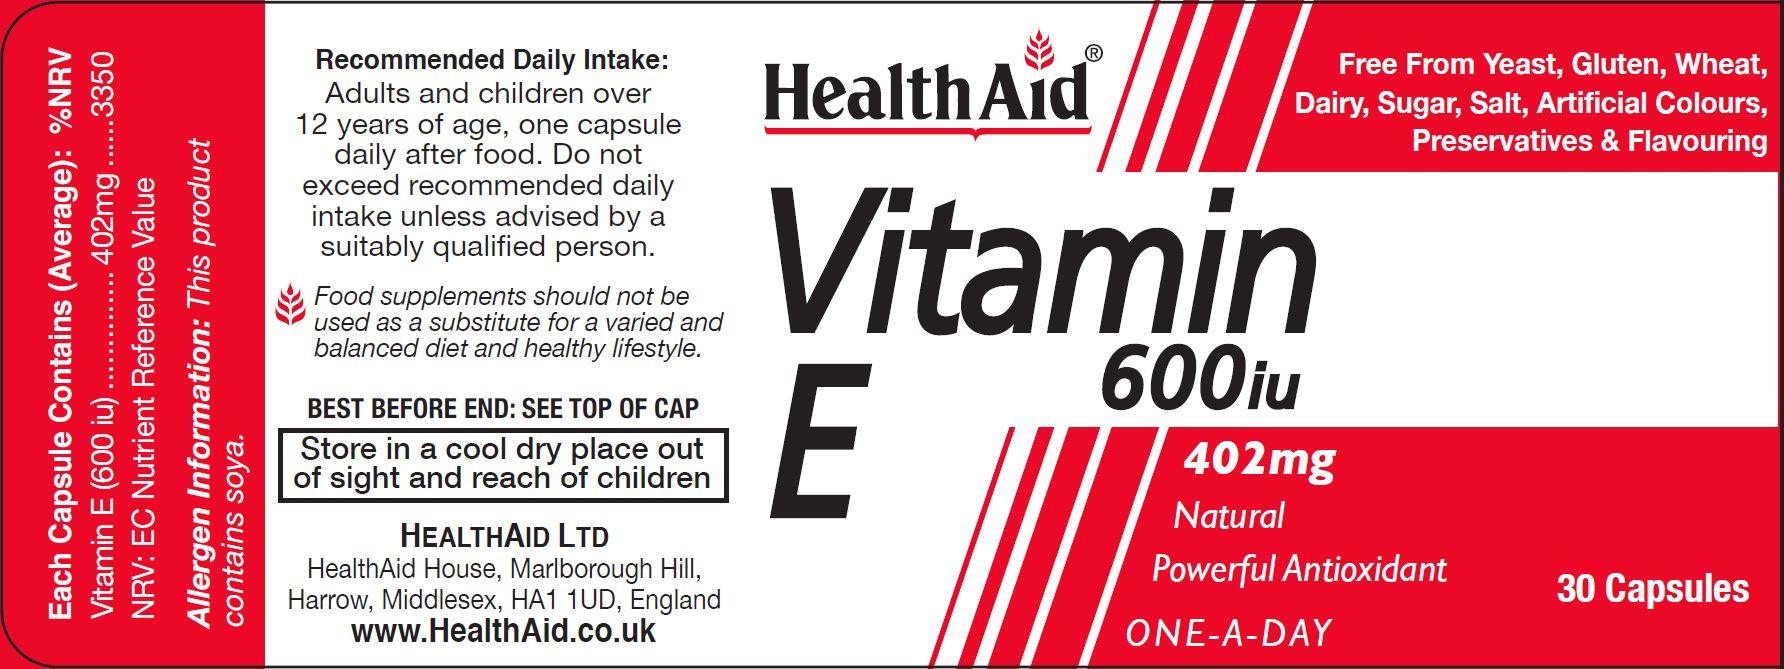 Health Aid Vitamin E 600iu 30's - Approved Vitamins